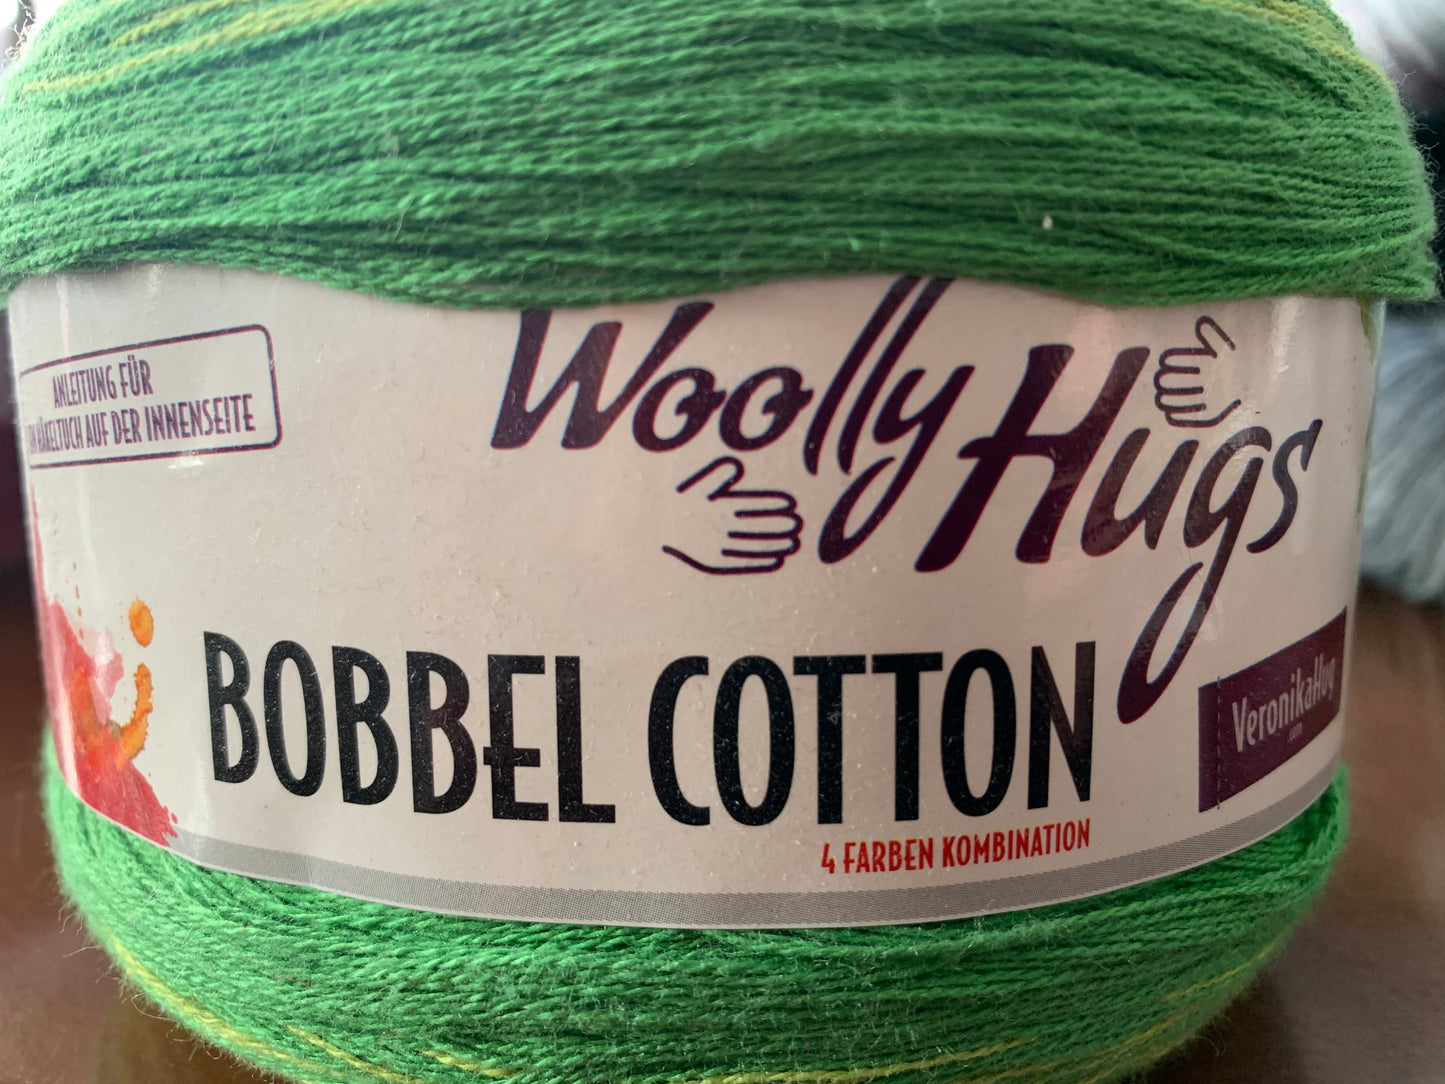 Bobbel cotton